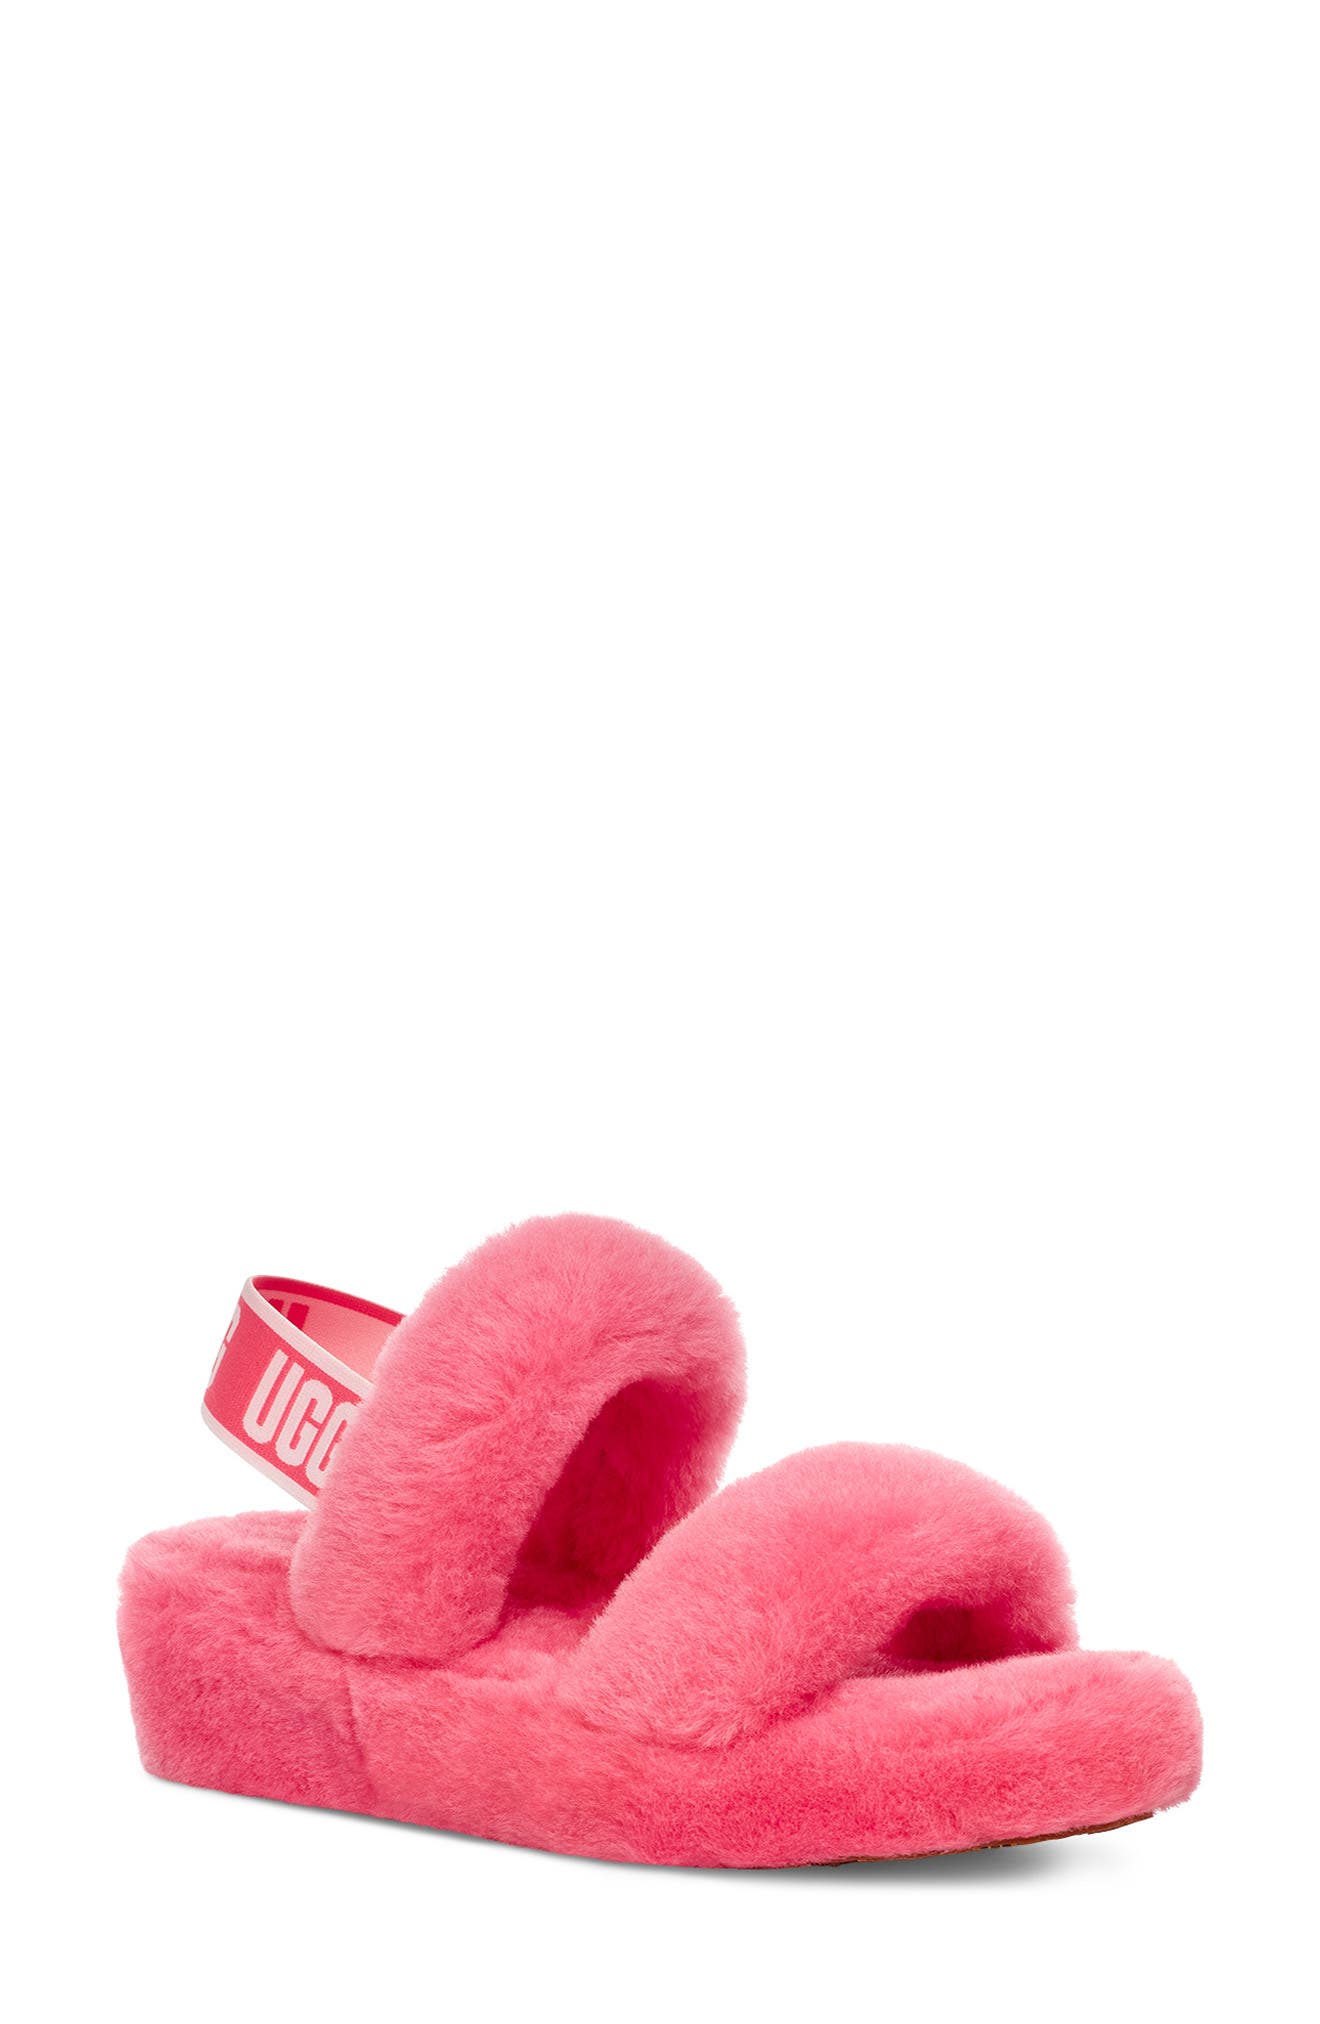 ugg slippers women pink